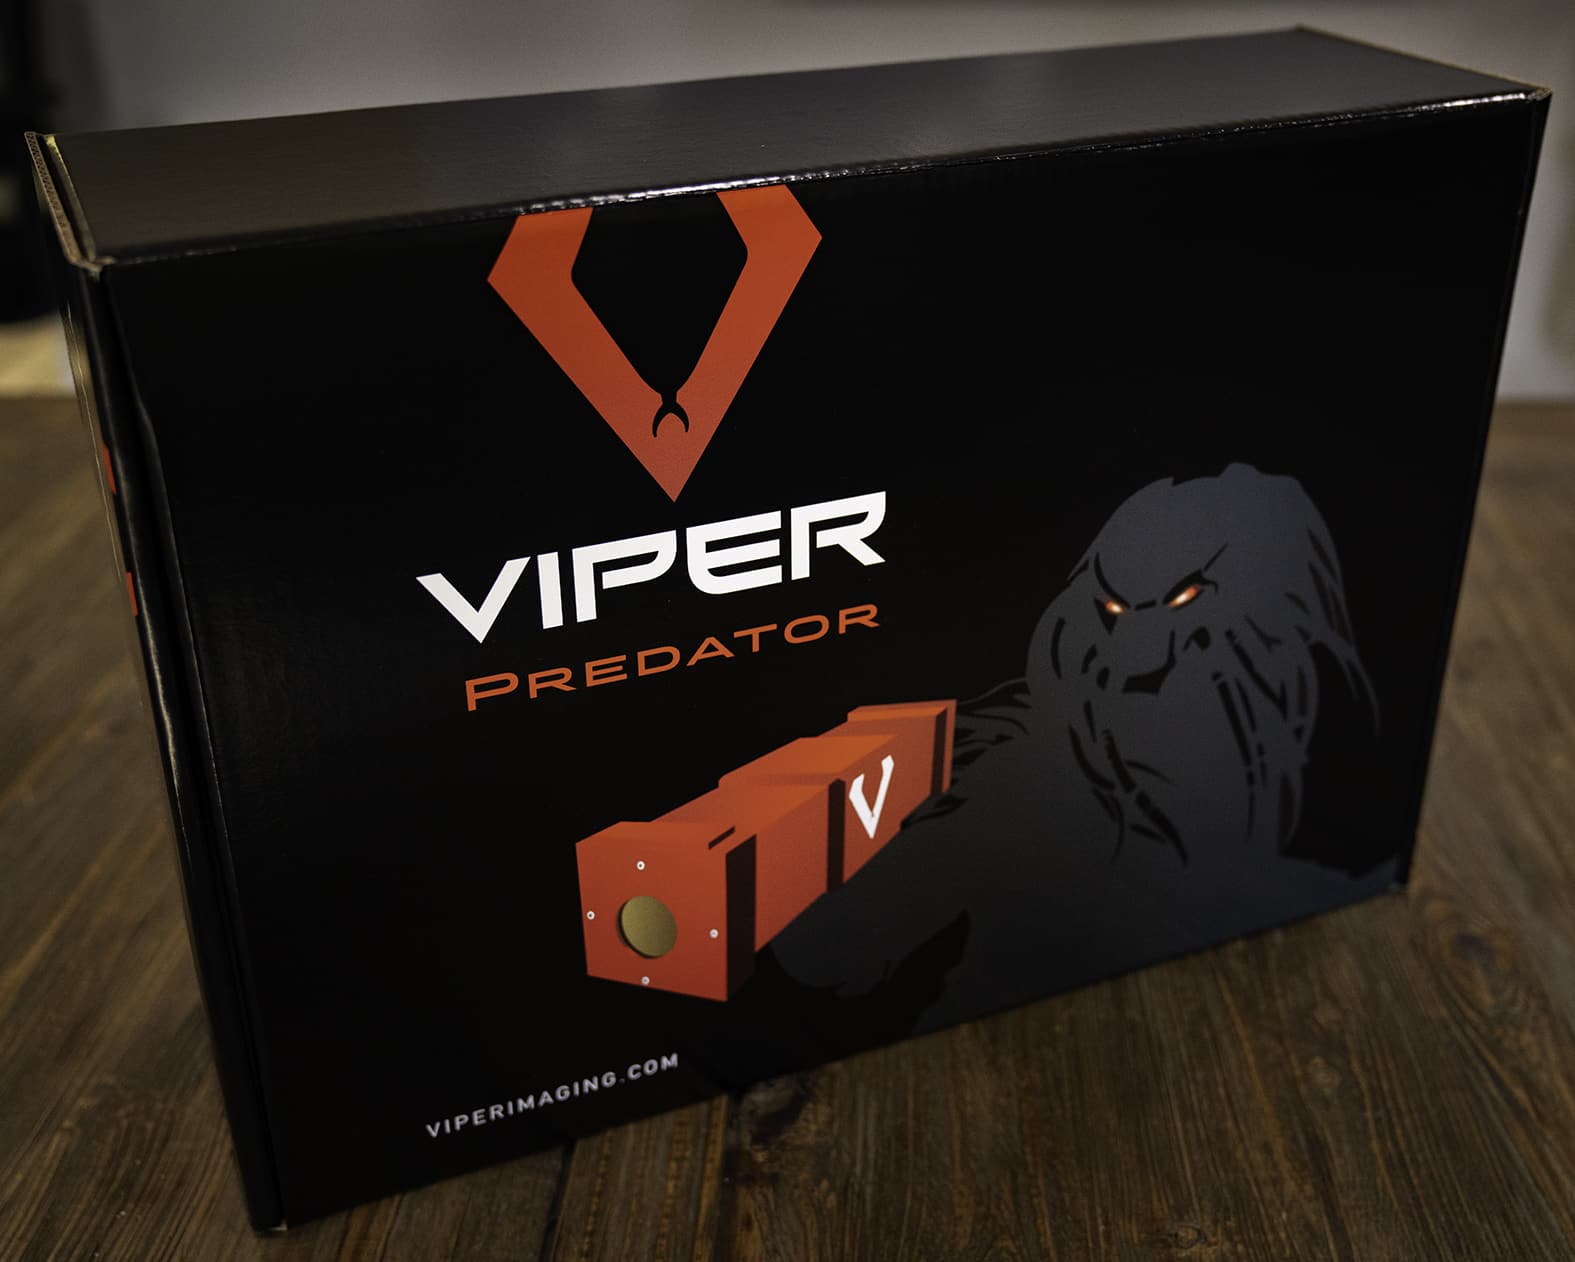 Viper Predator kit